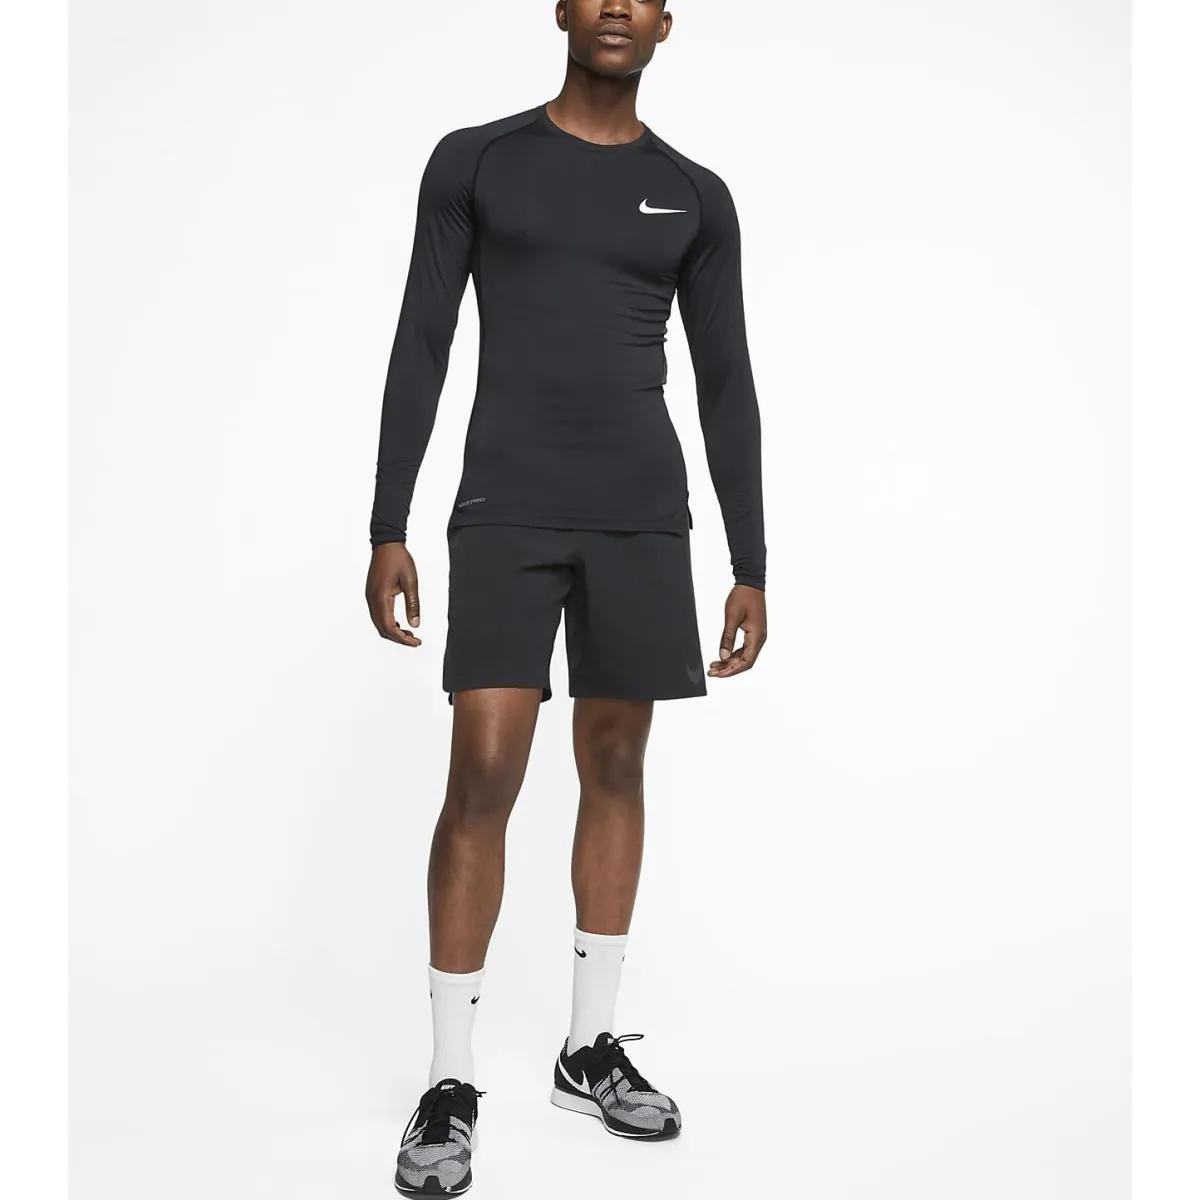 Nike Pro Men's Tight Fit Long-Sleeve Top BV5588-010